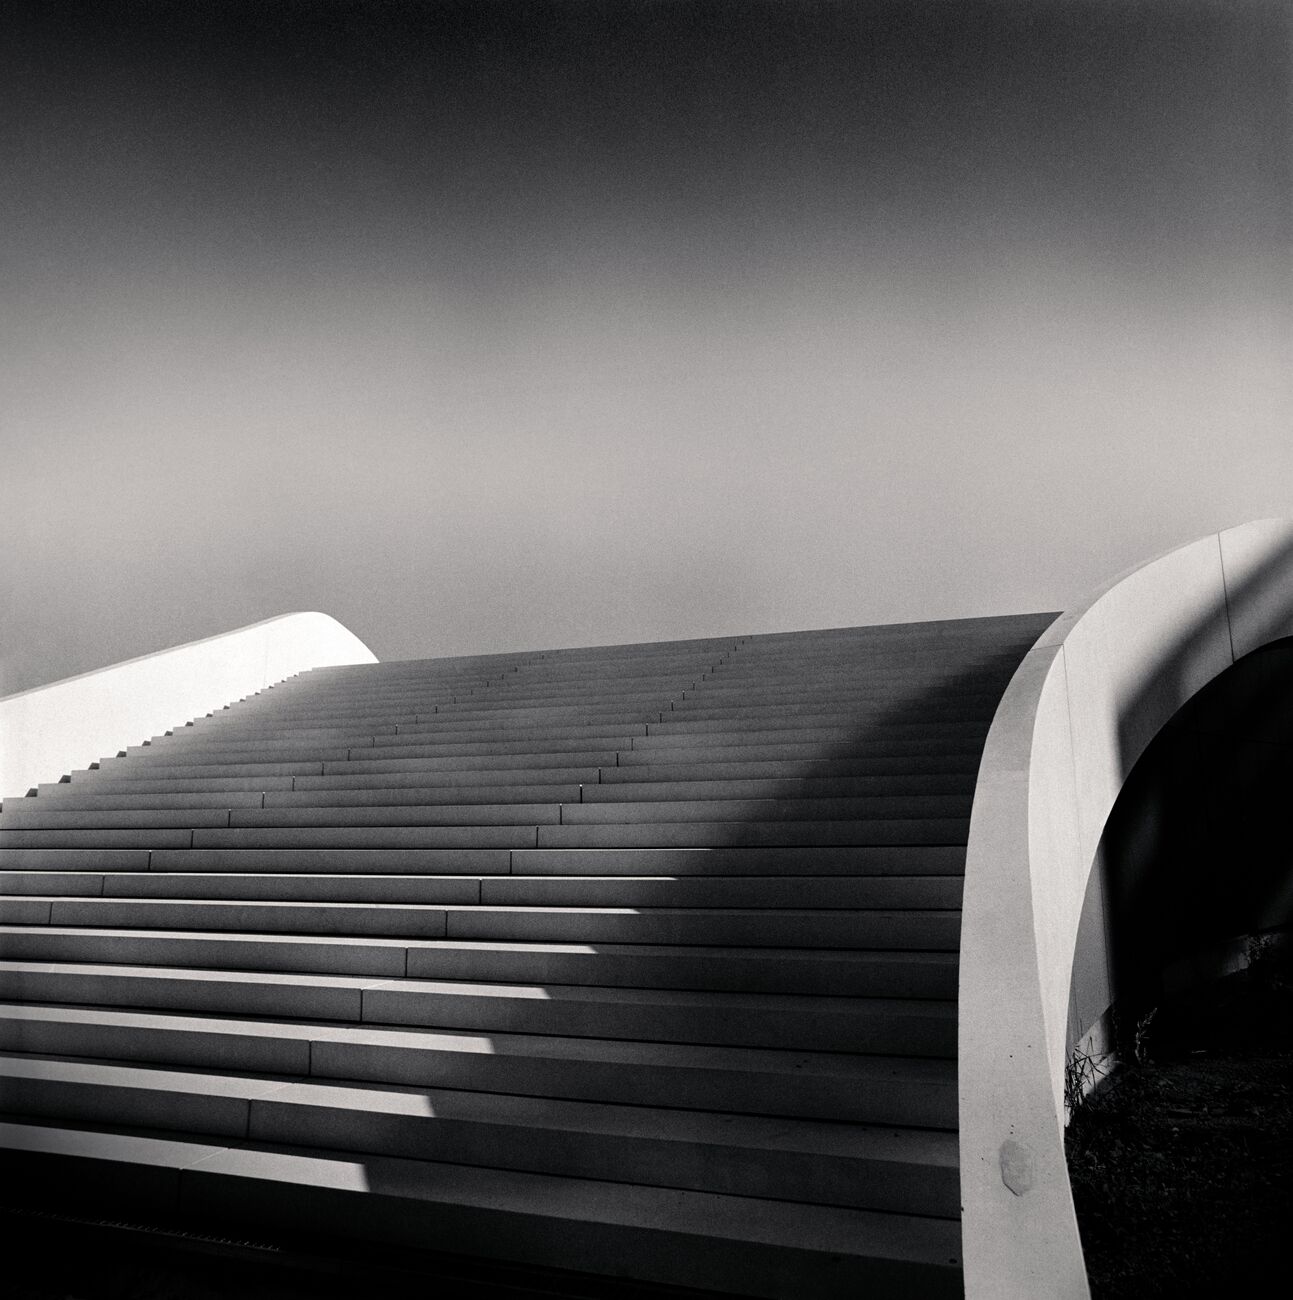 Stairway, Quai De Paludate, Bordeaux, France. September 2020. Ref-1383 - Denis Olivier Photography